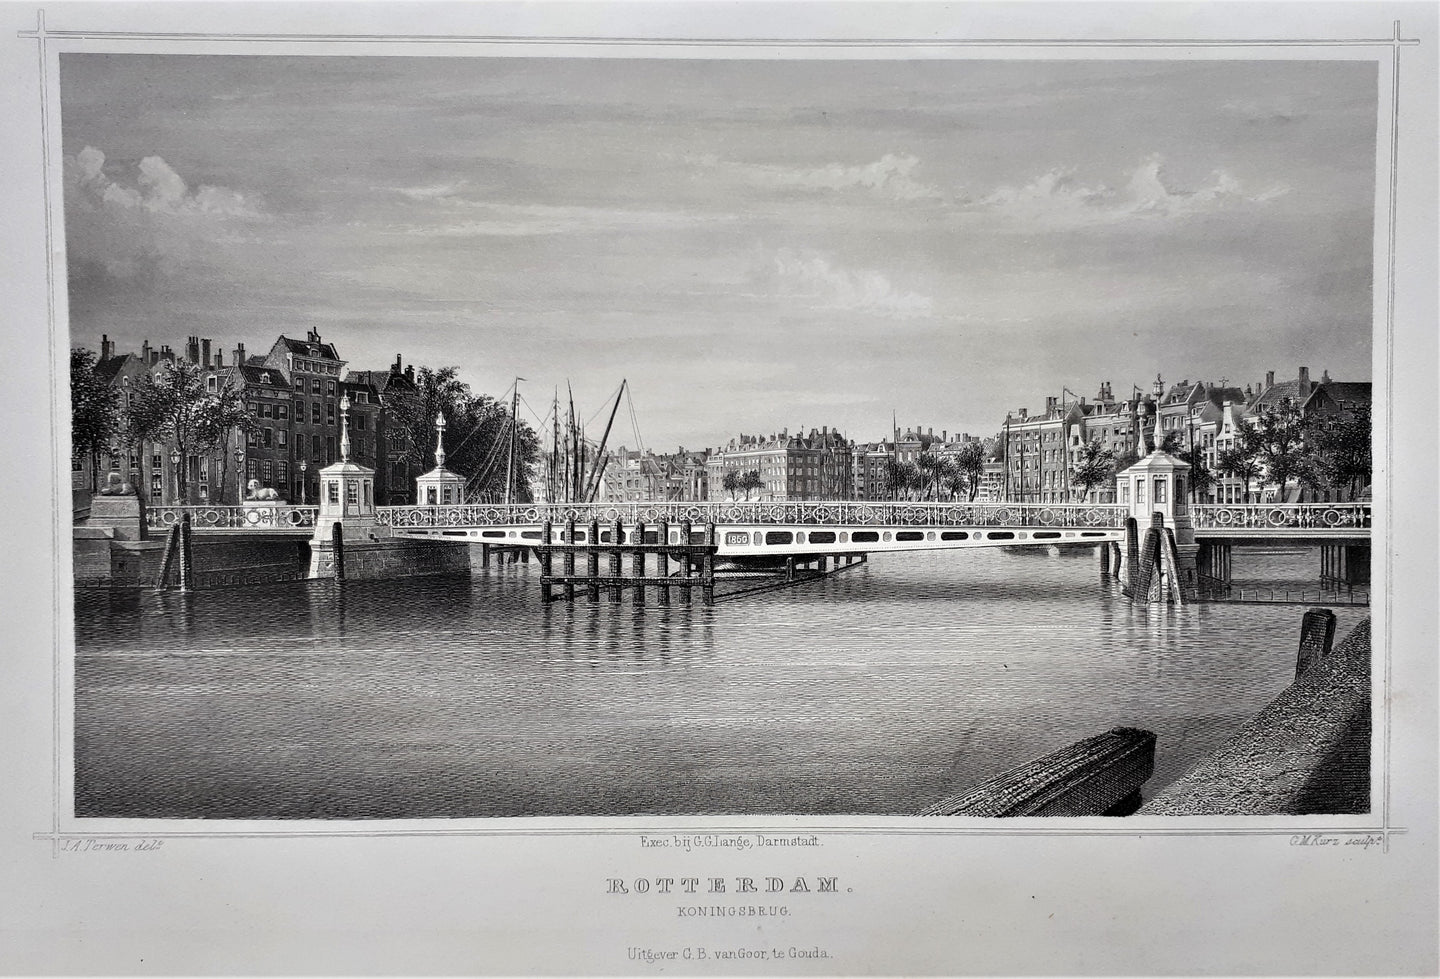 ROTTERDAM Koningsbrug - JL Terwen / GB van Goor - 1858